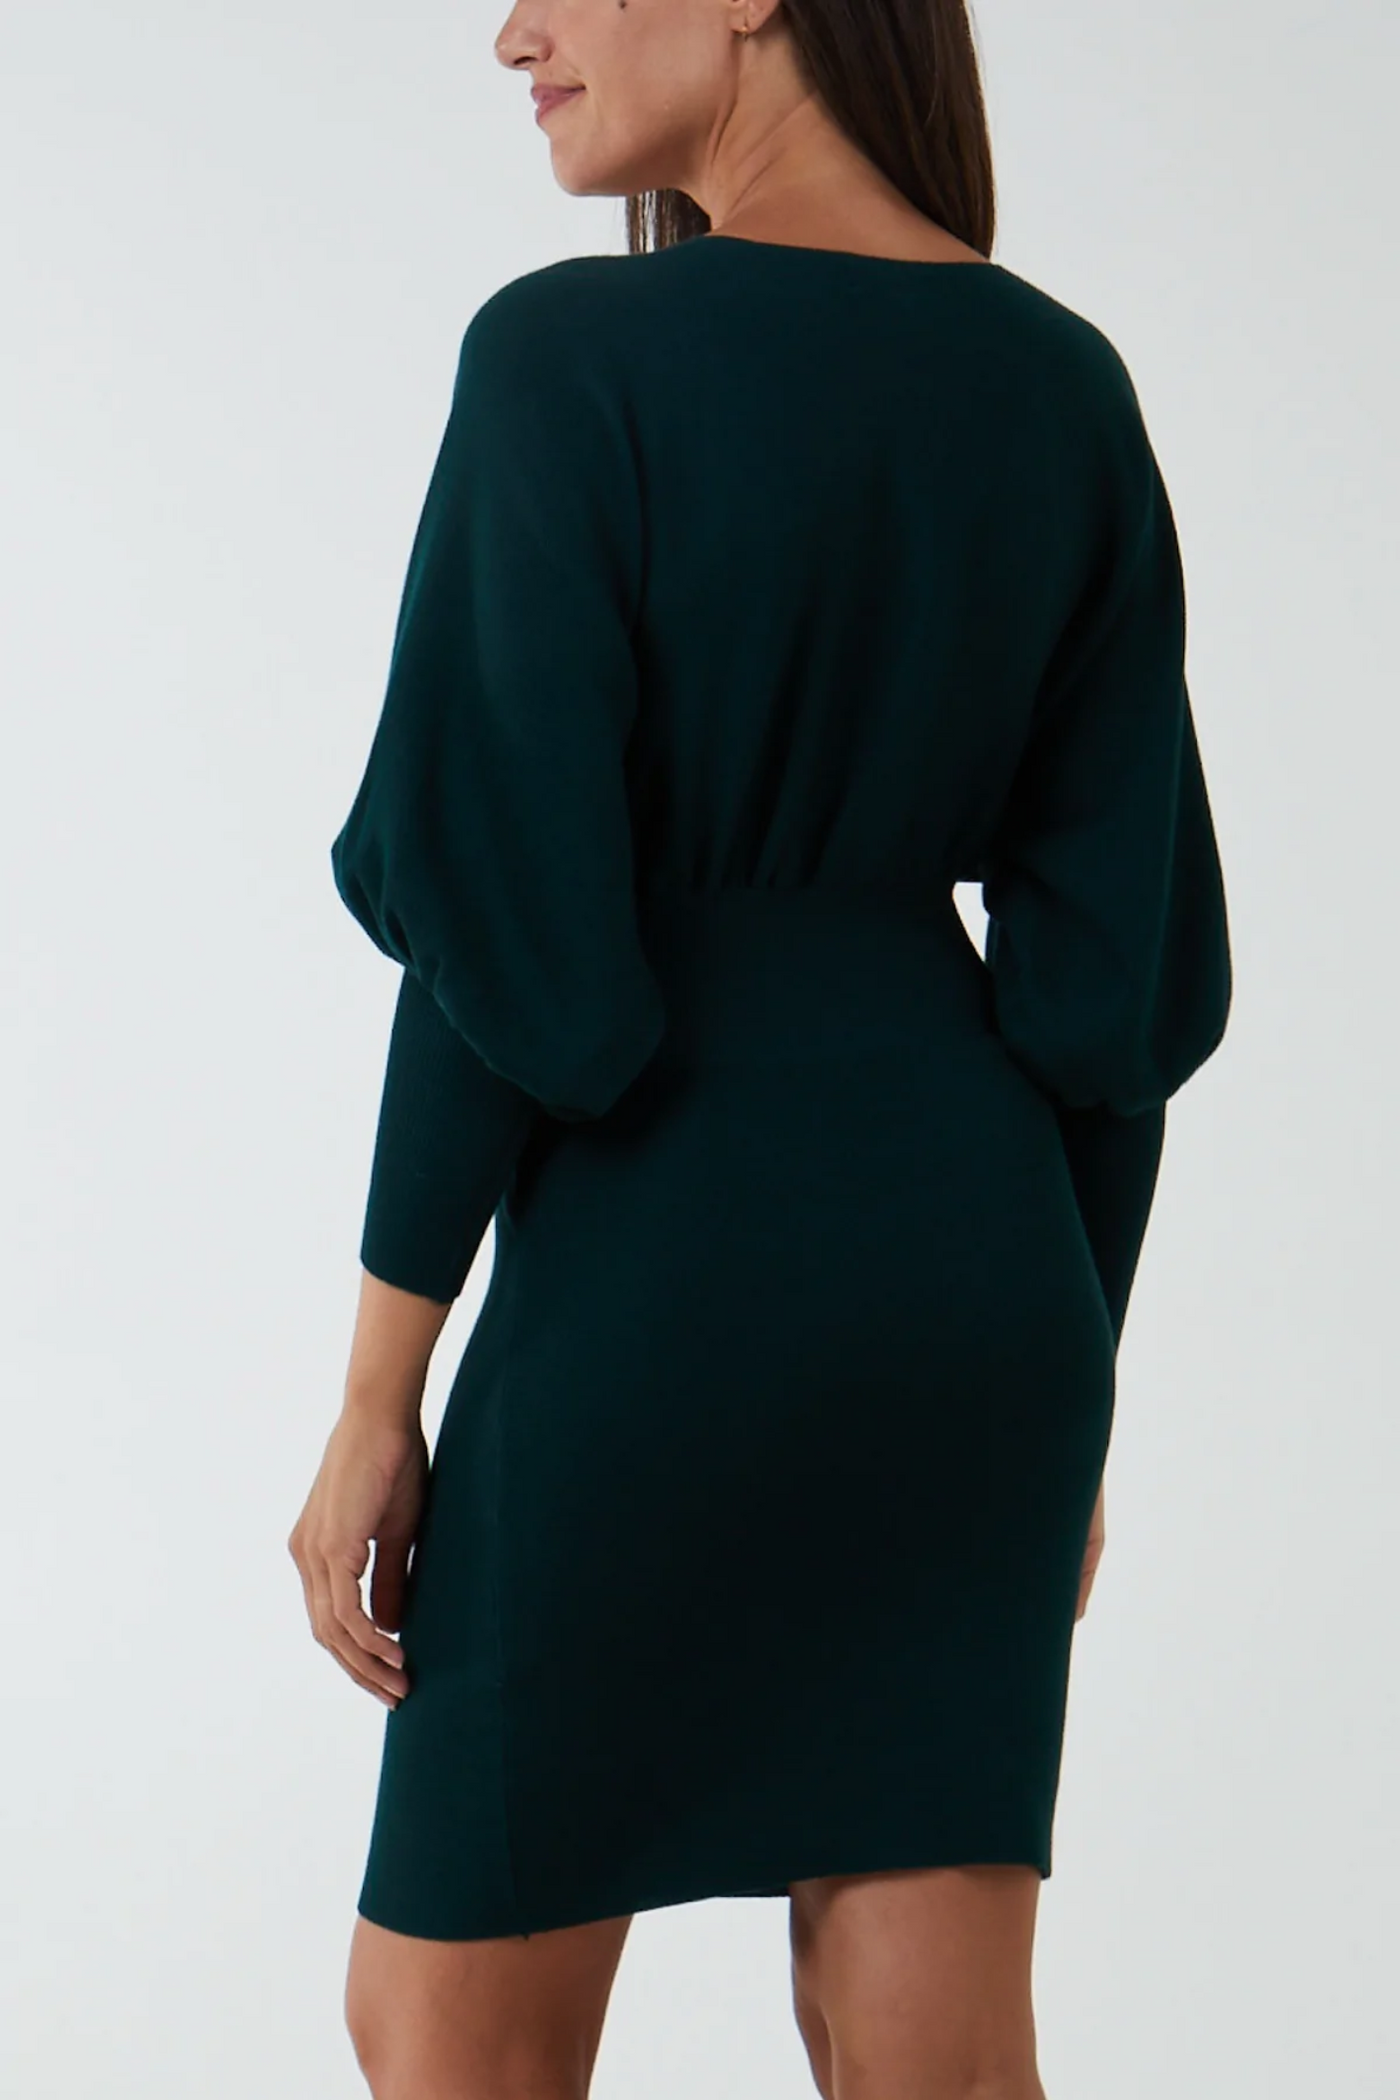 Puss Sleeve Black Bodycon Dress | Jezabel Boutique